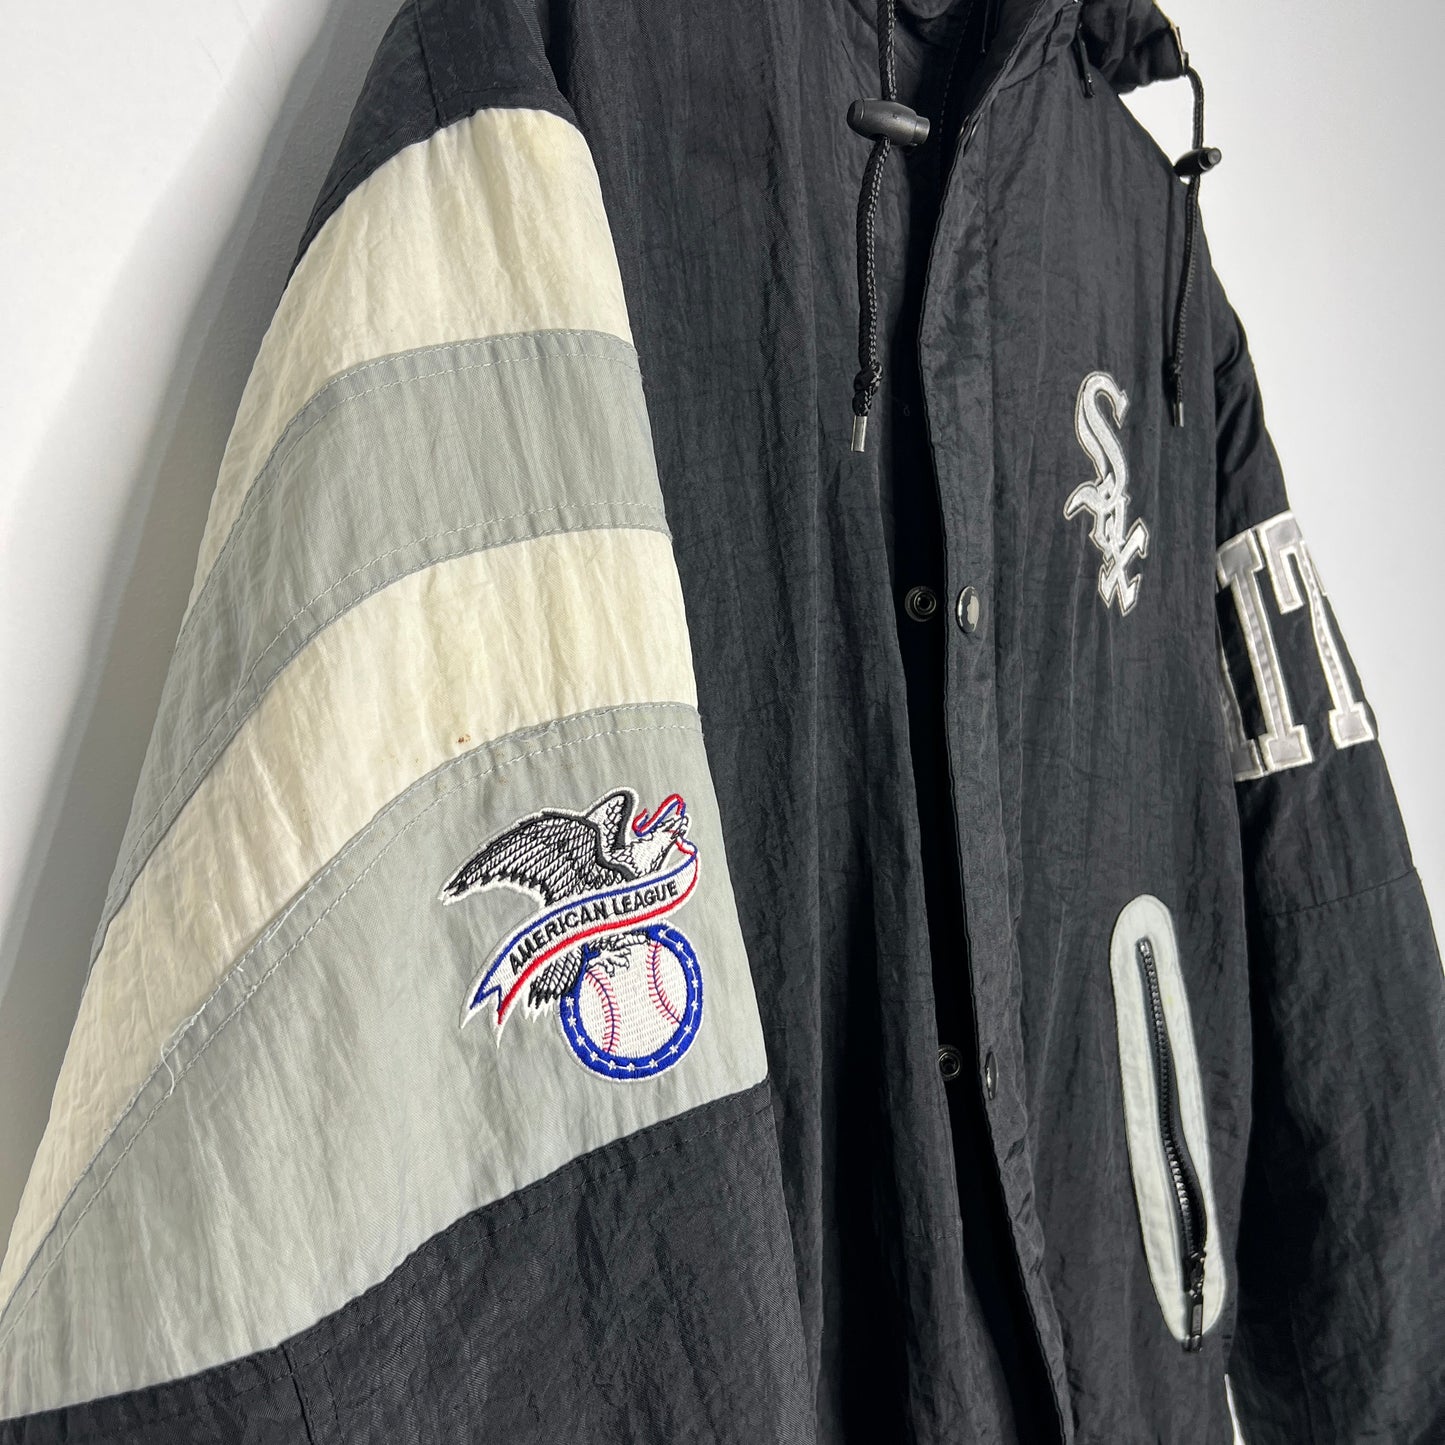 White Sox Vertical Split Jacket